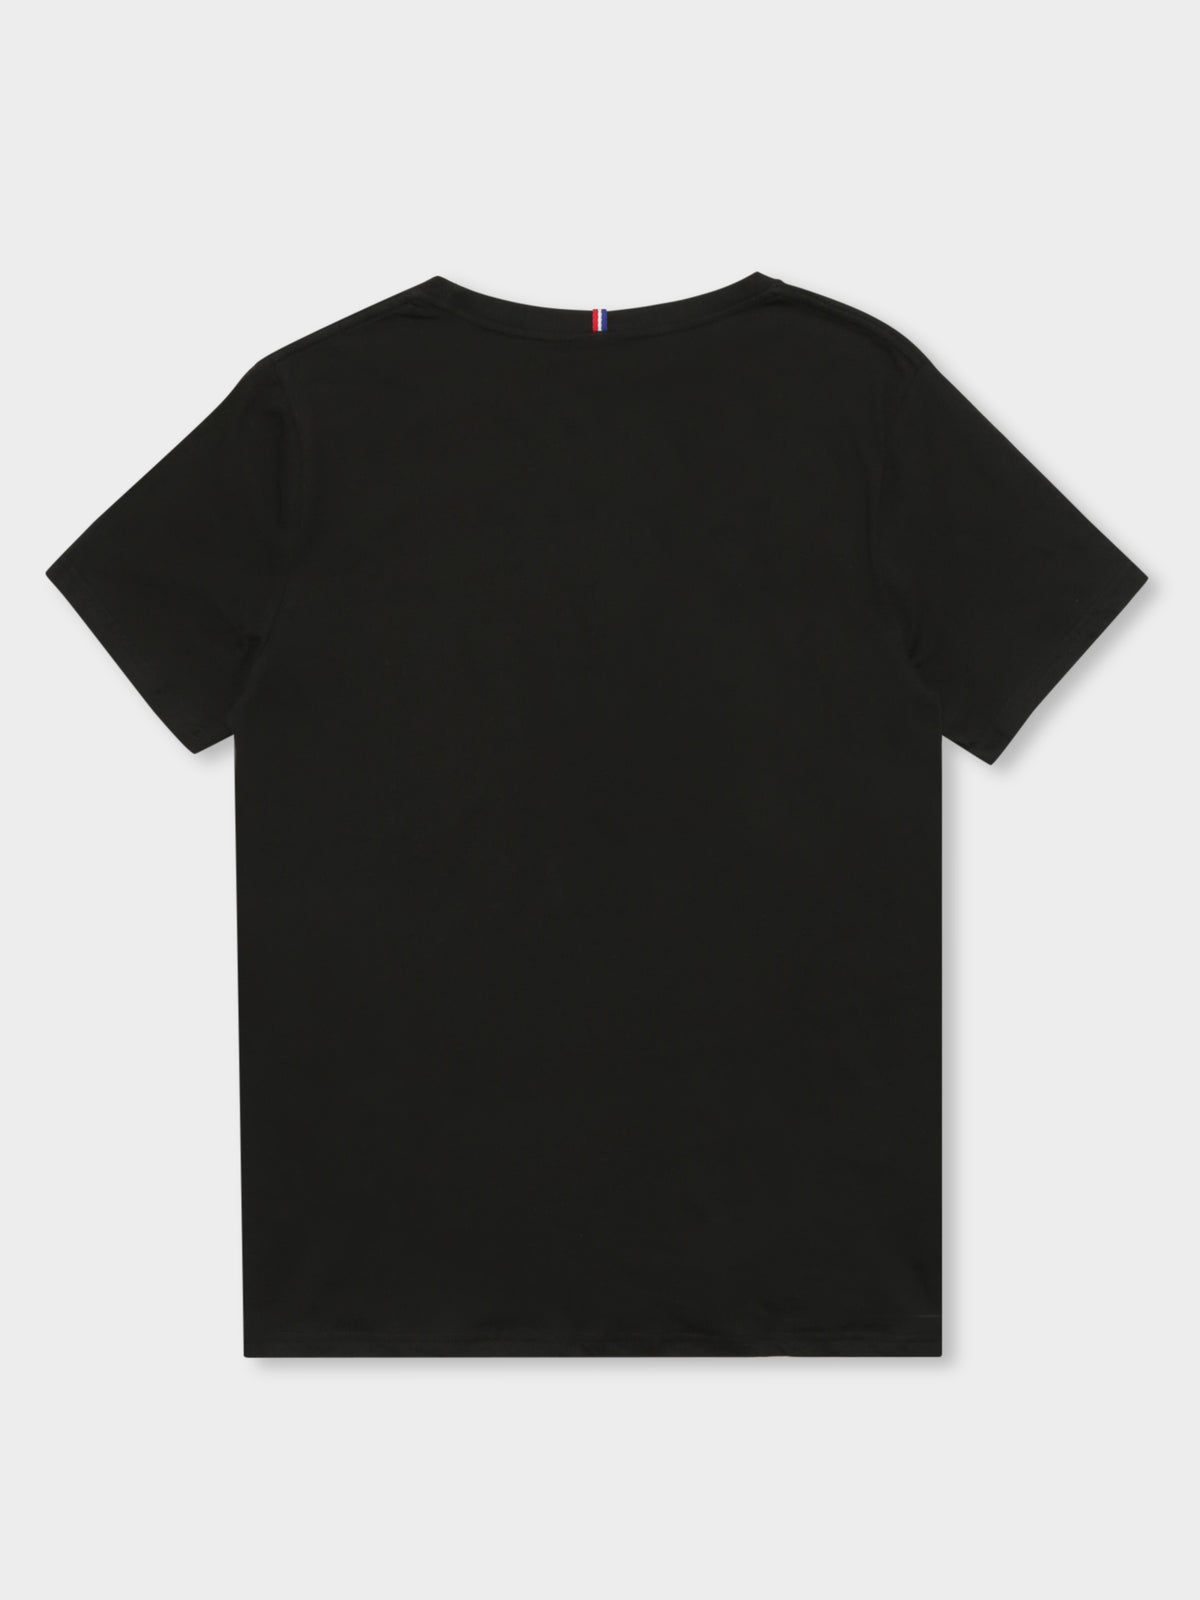 Roissy T-Shirt in Black